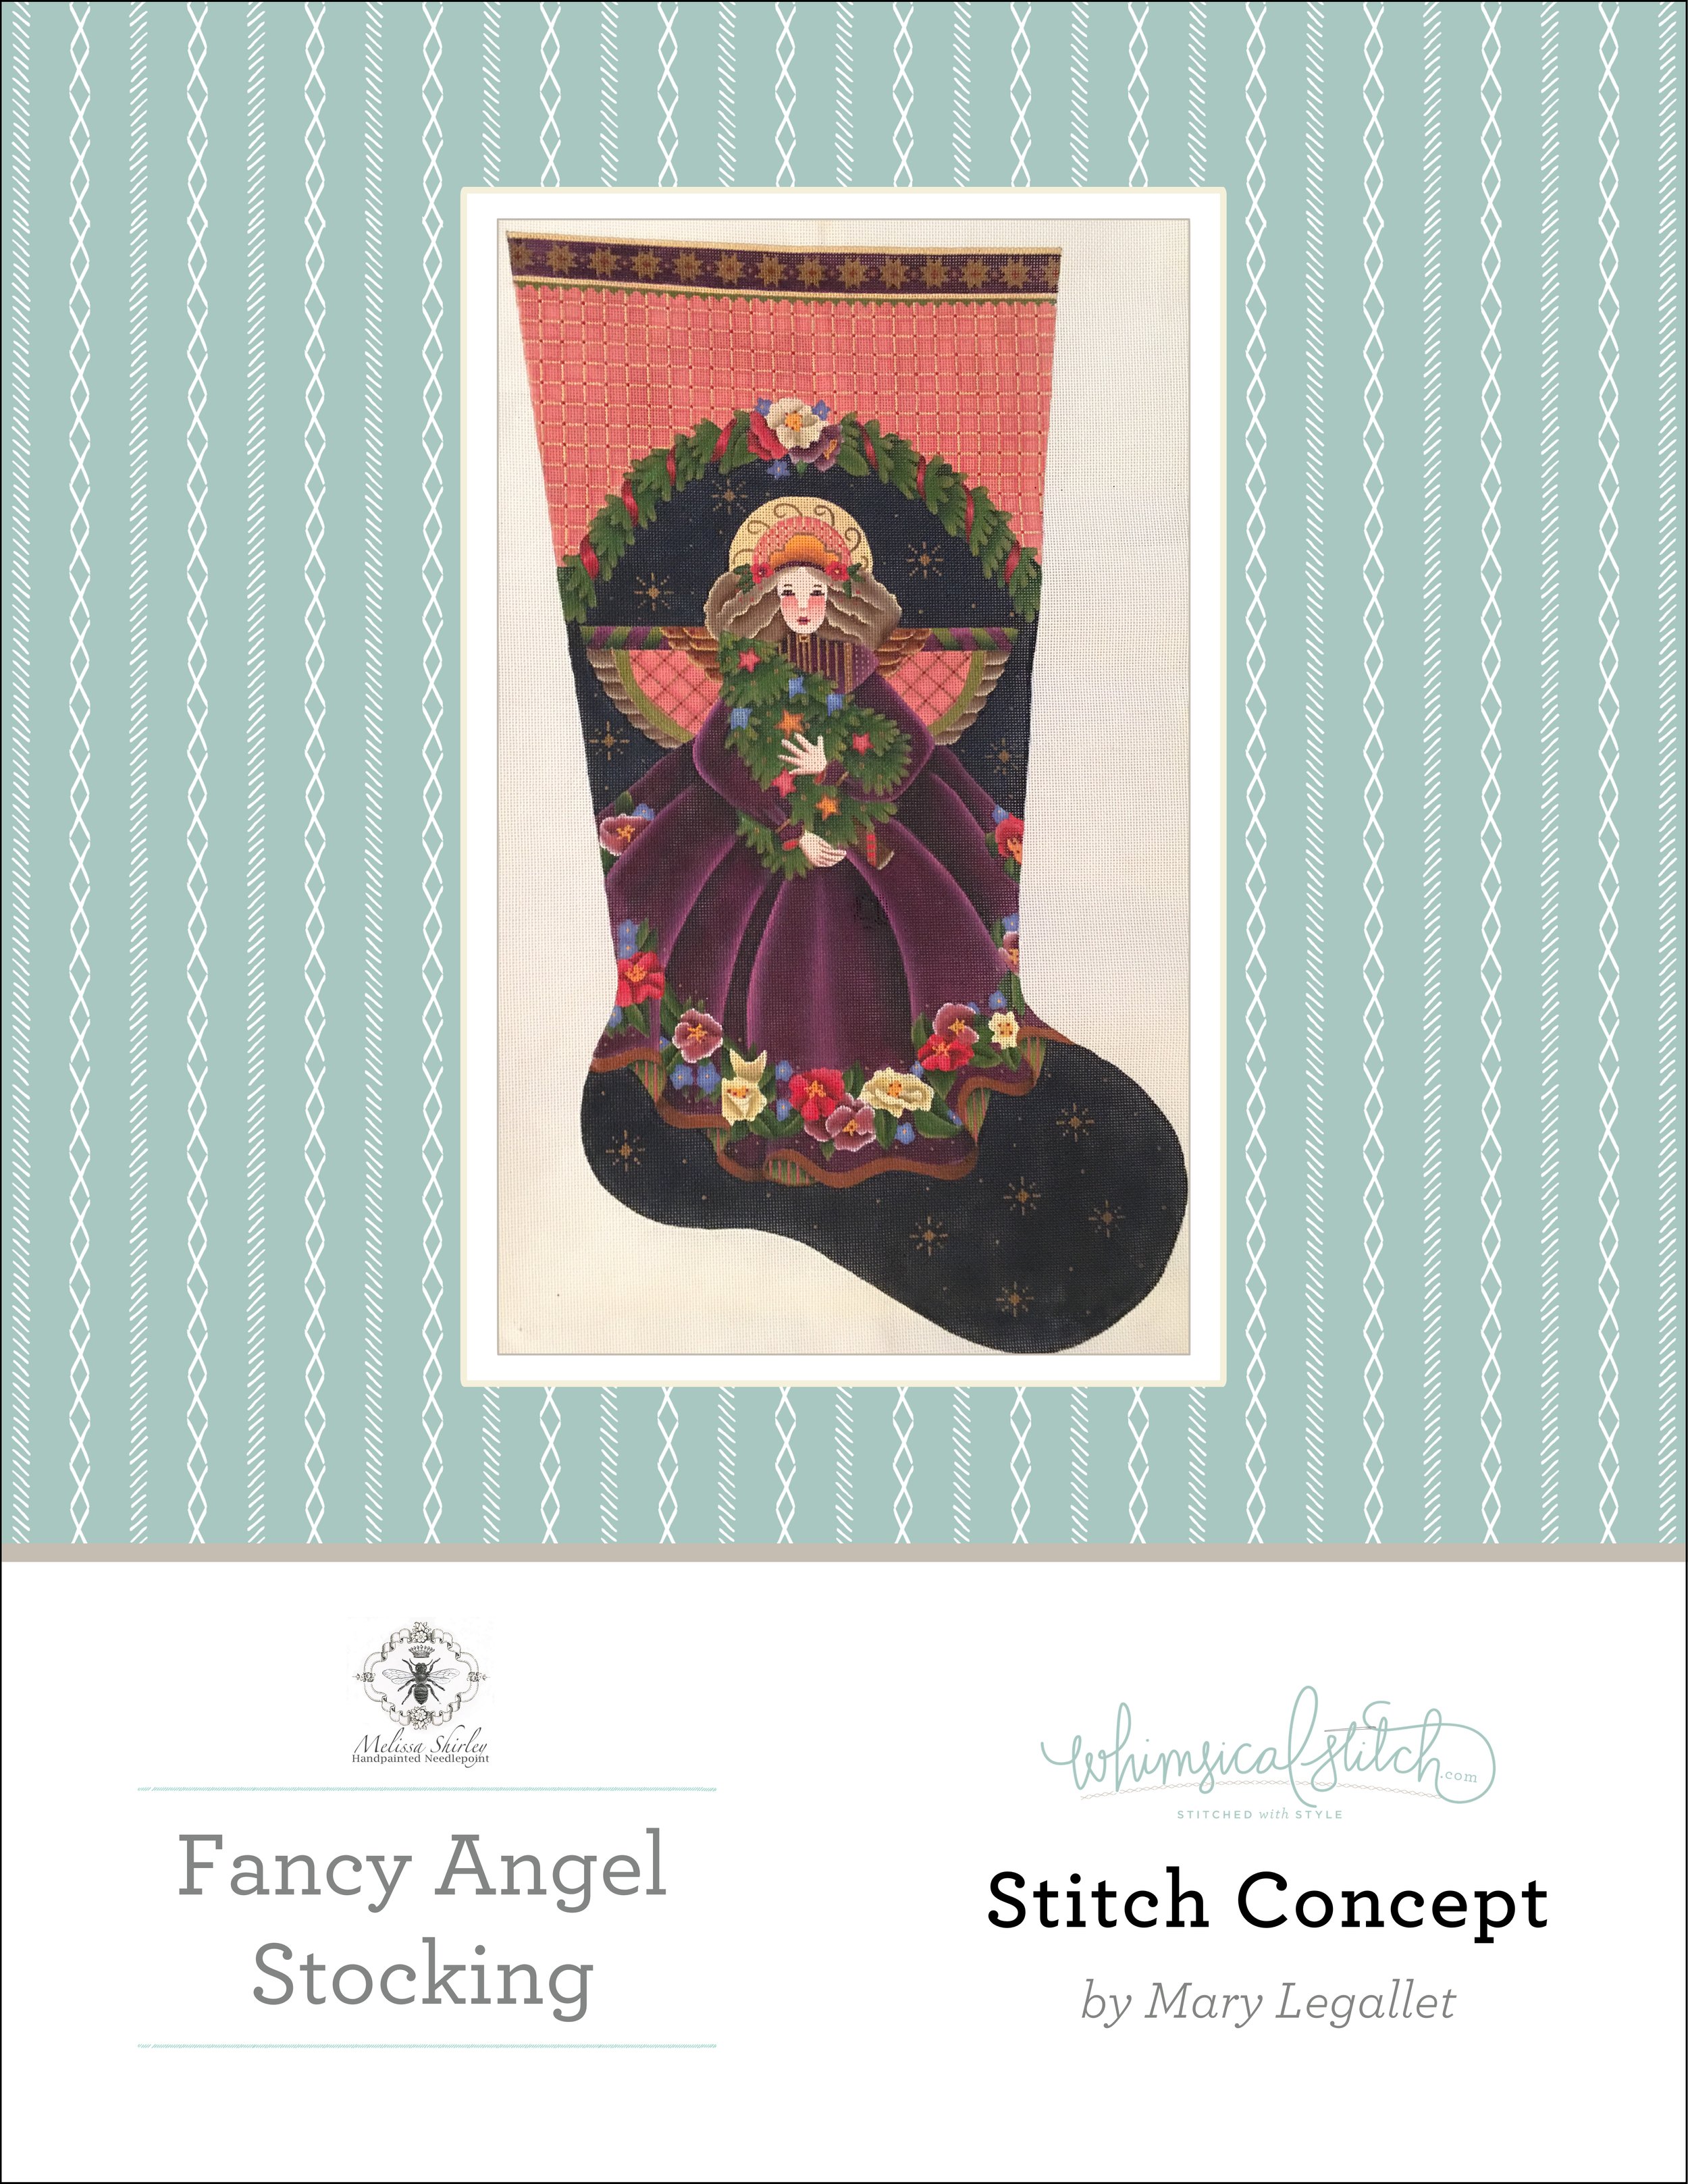 Fancy Angel Stocking